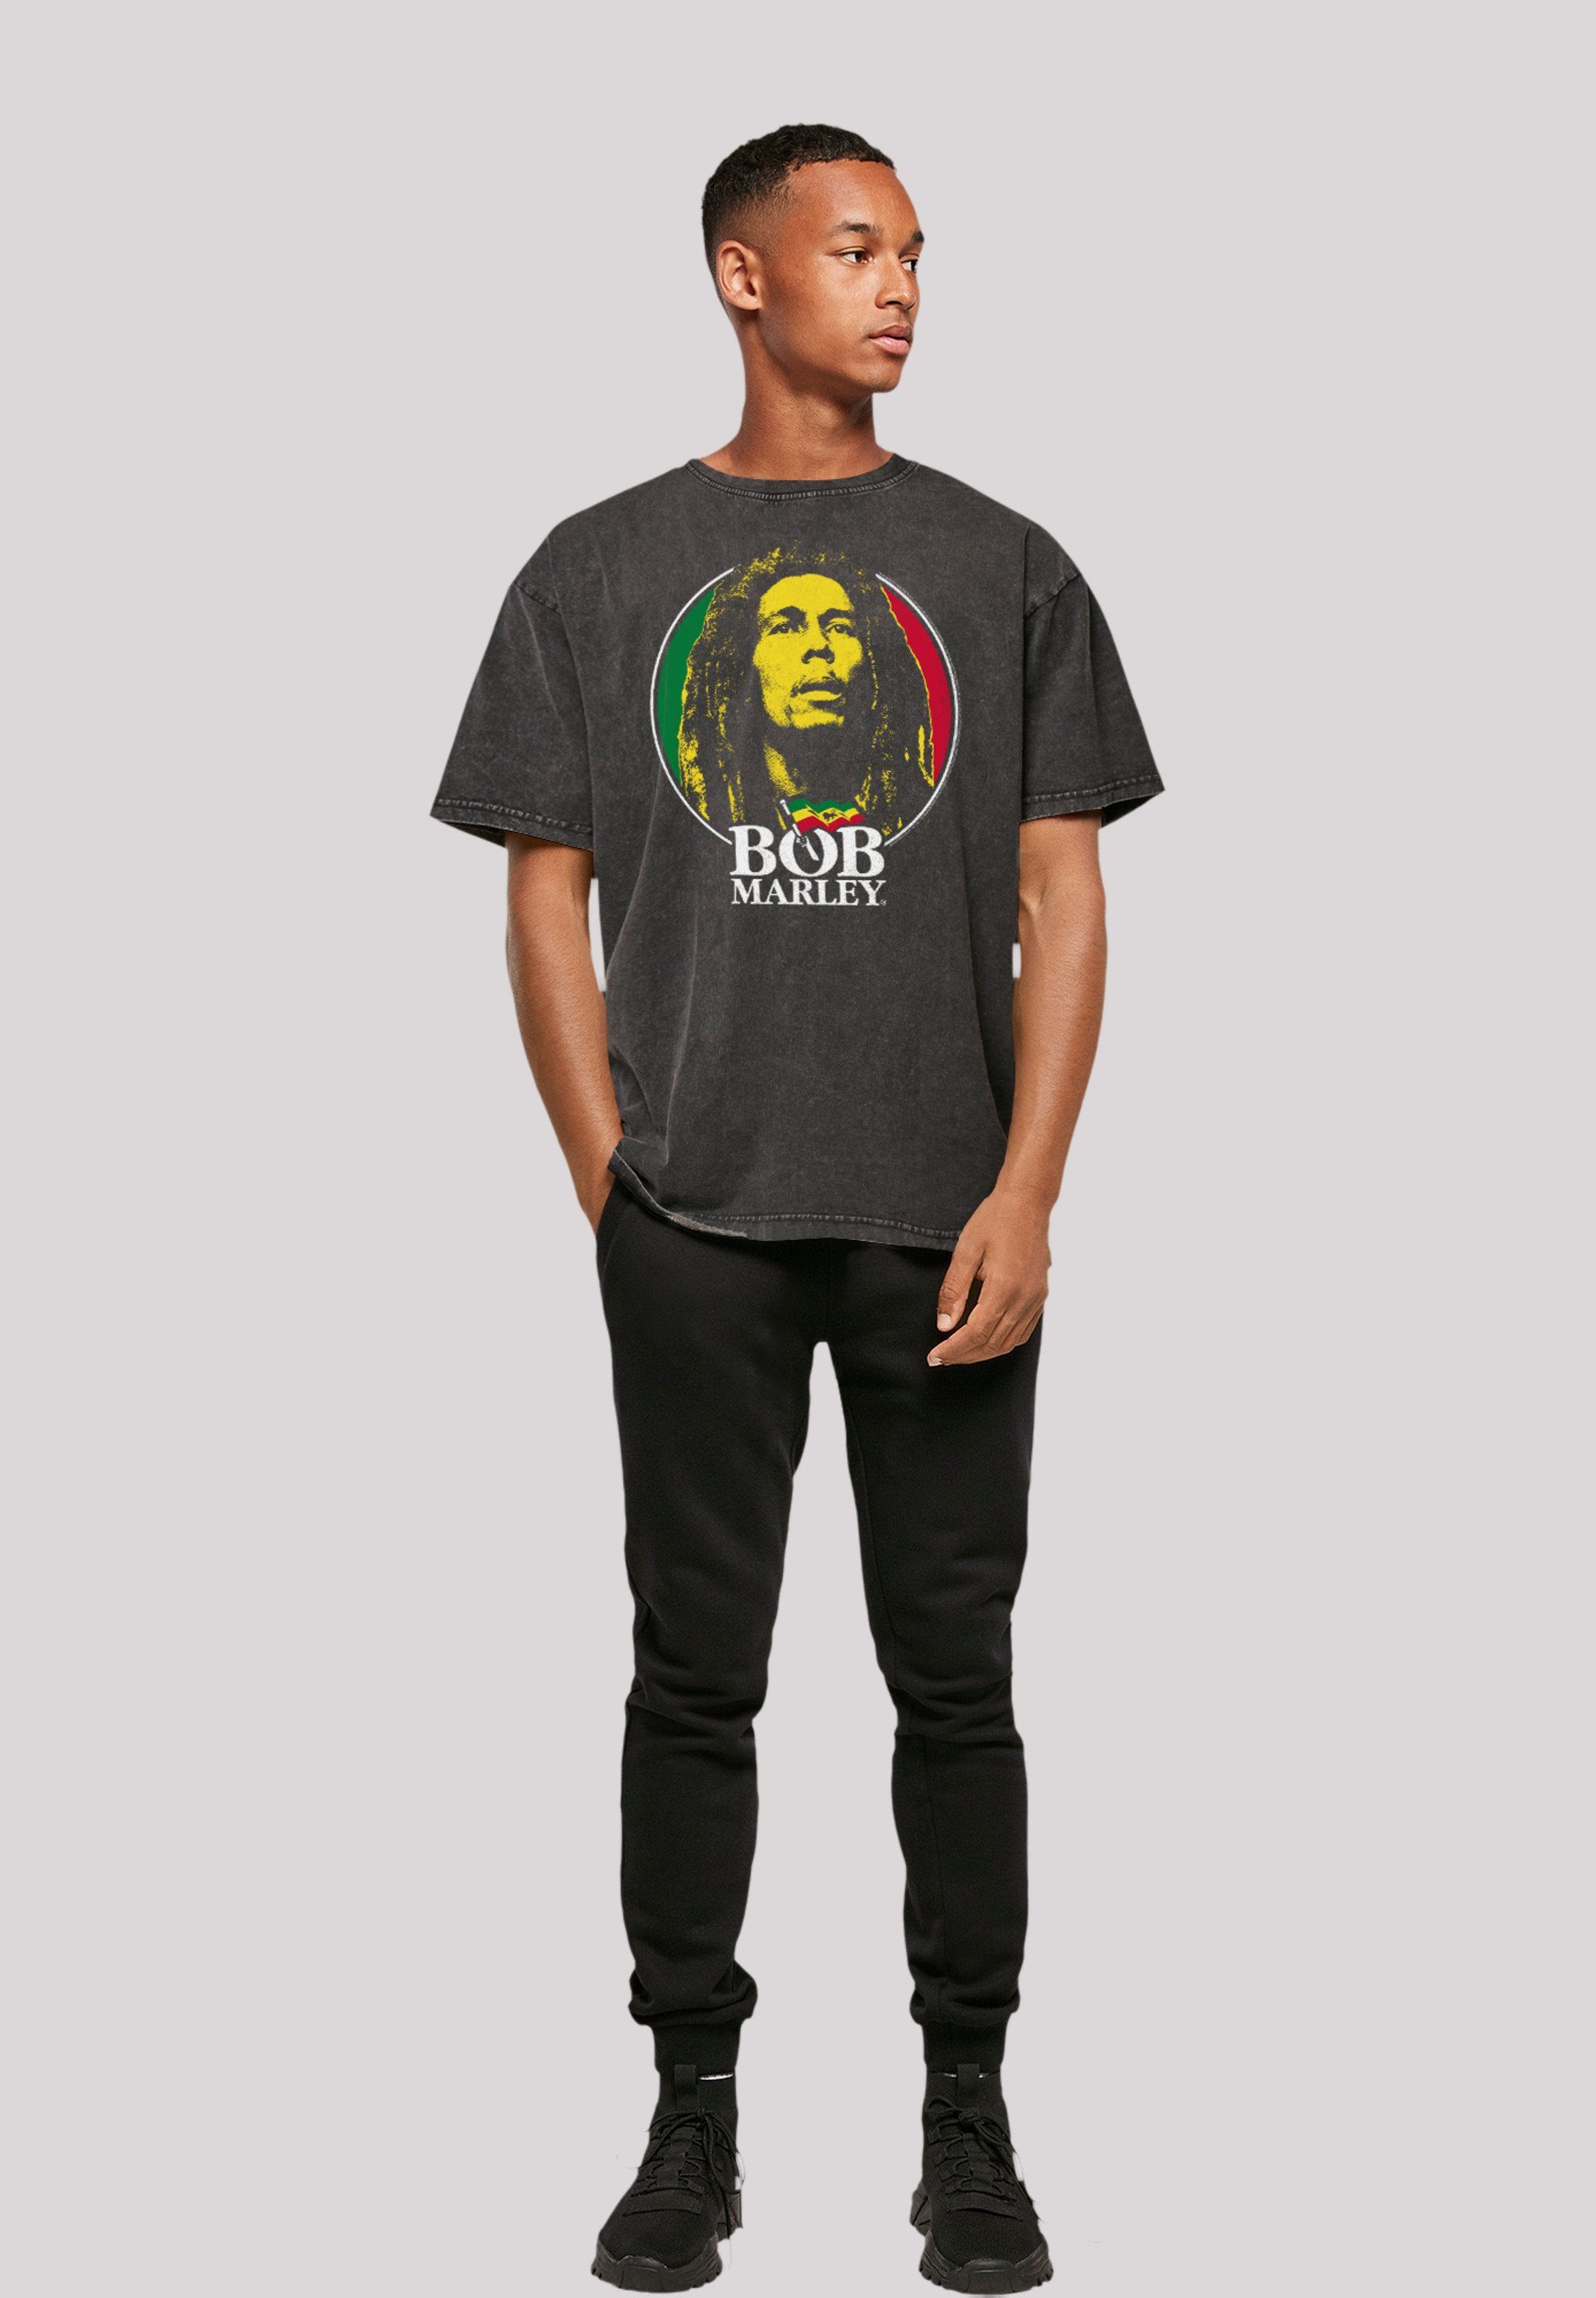 F4NT4STIC Reggae By Qualität, Musik, Badge Off Marley Logo T-Shirt Rock Premium Music Bob